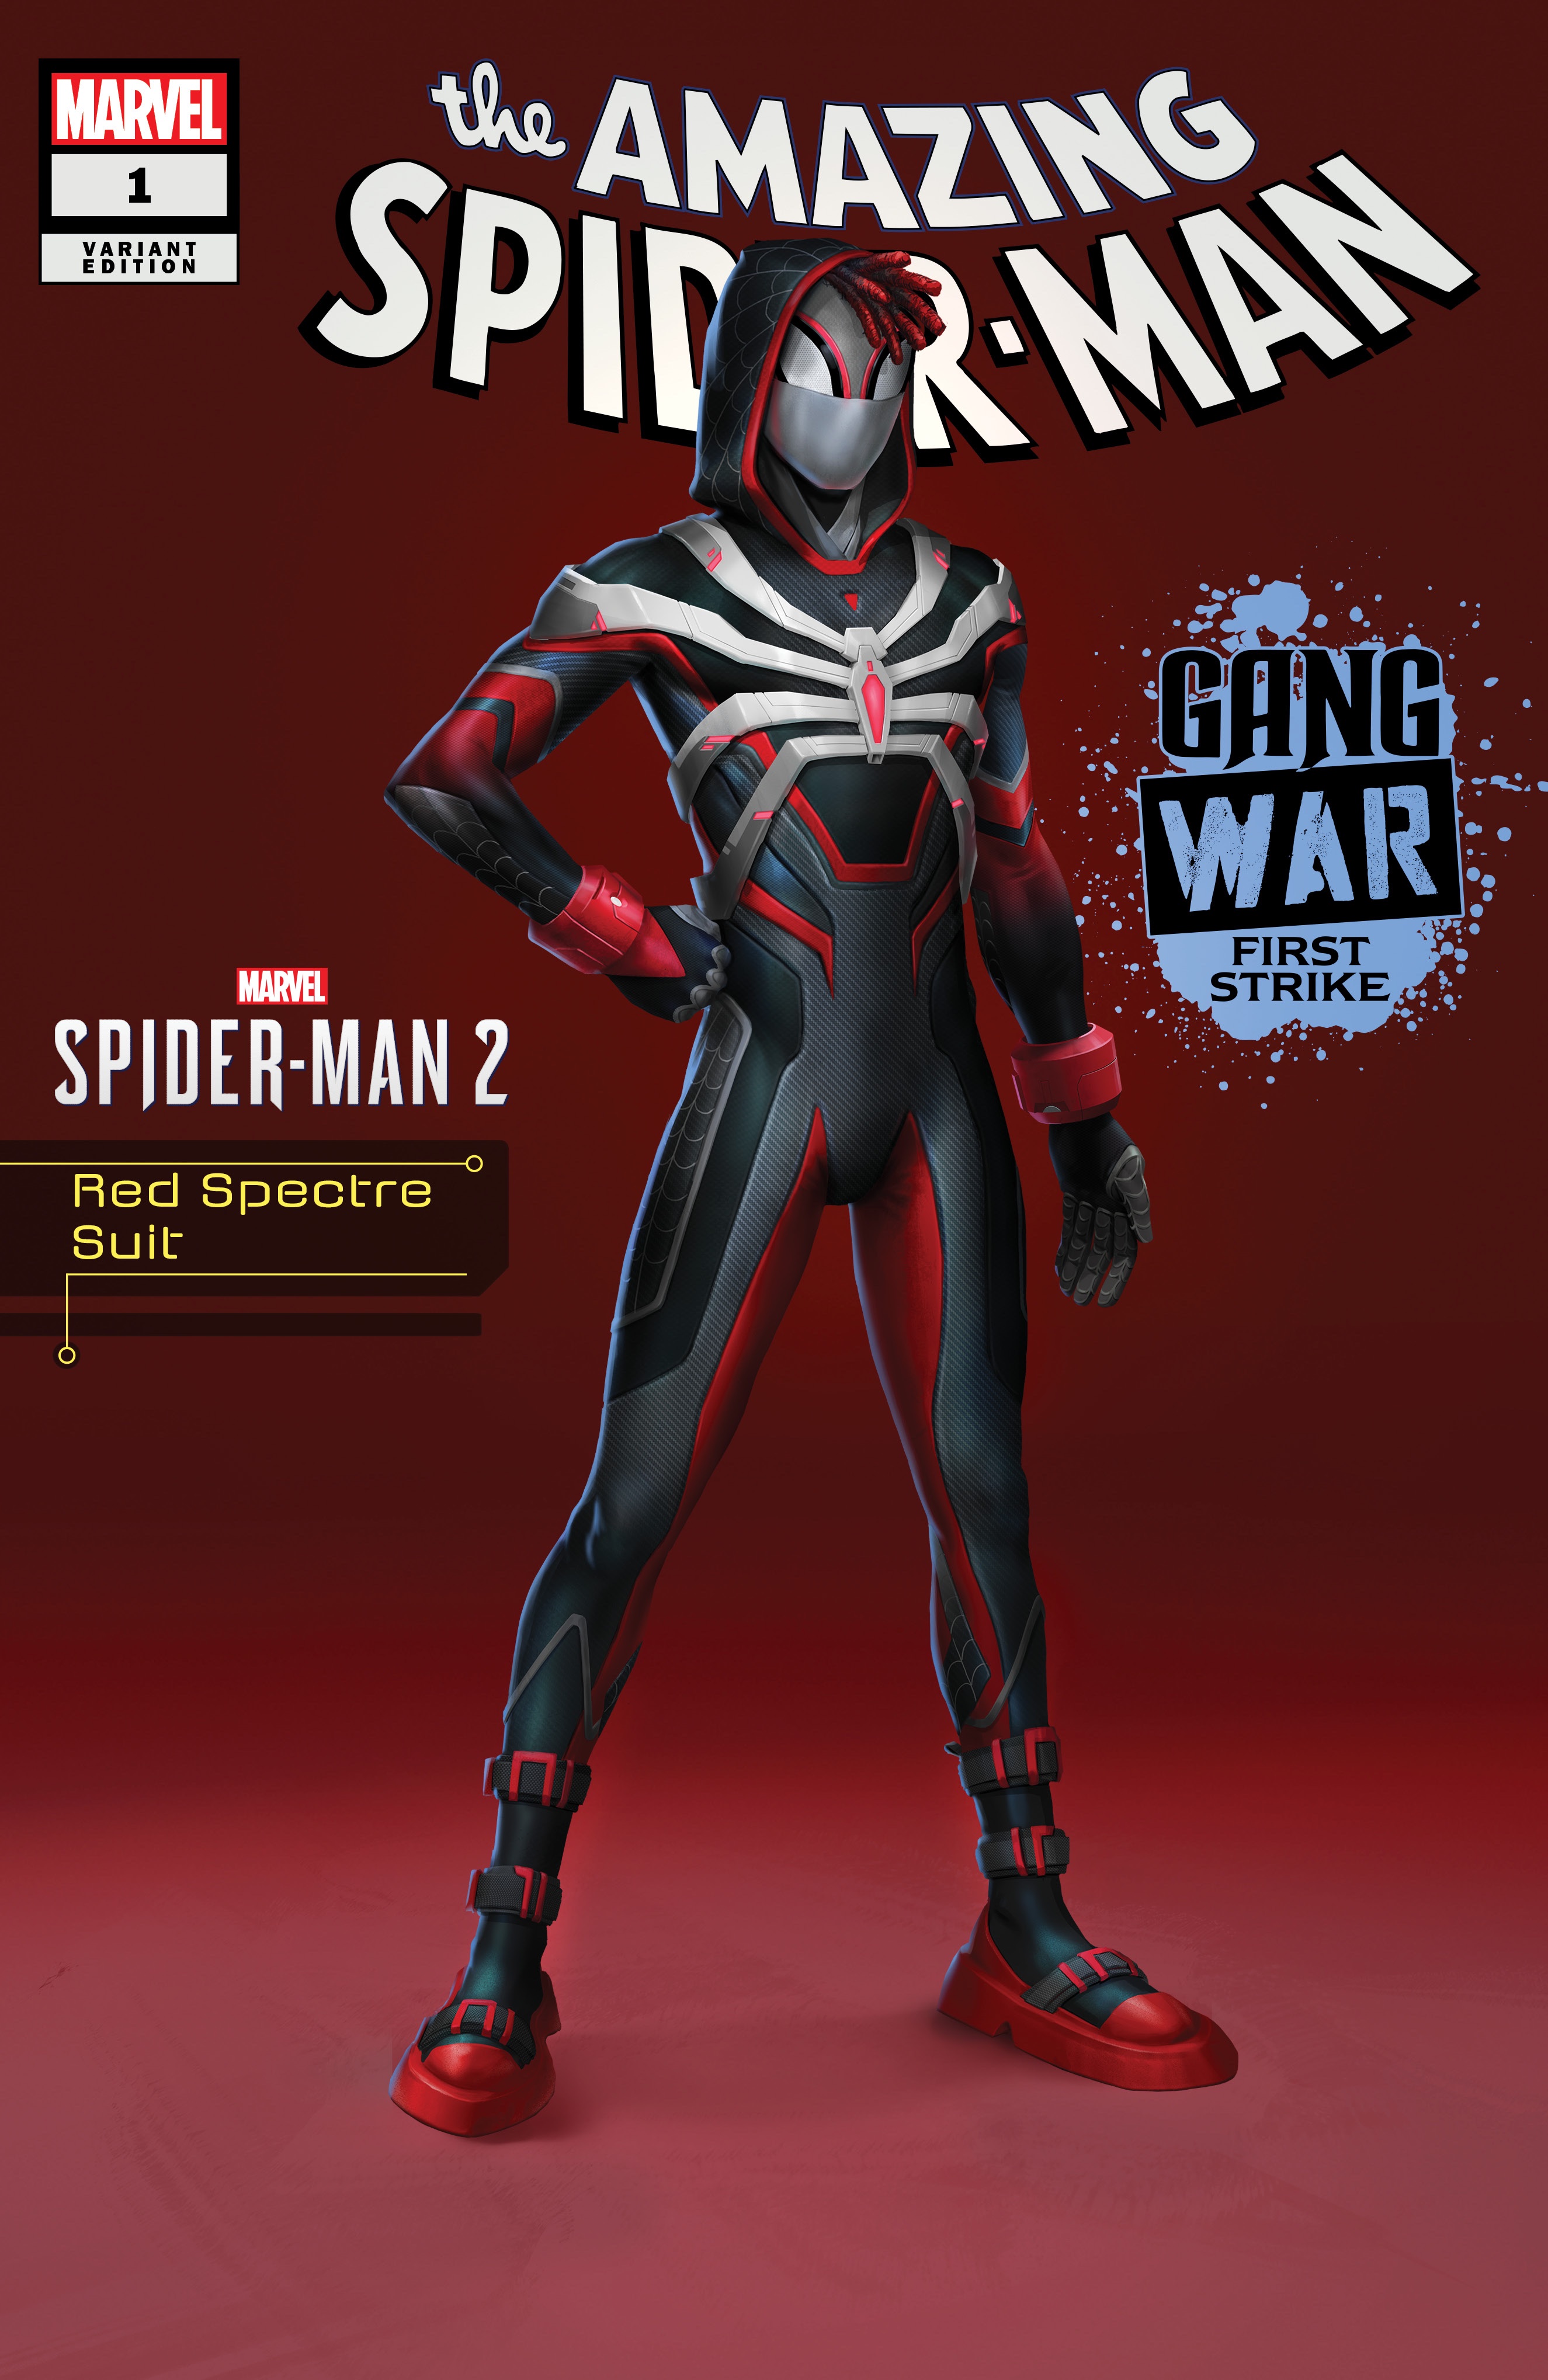 https://static.wikia.nocookie.net/marveldatabase/images/3/33/Amazing_Spider-Man_Gang_War_First_Strike_Vol_1_1_Marvel%27s_Spider-Man_2_Variant.jpg/revision/latest?cb=20231126024513